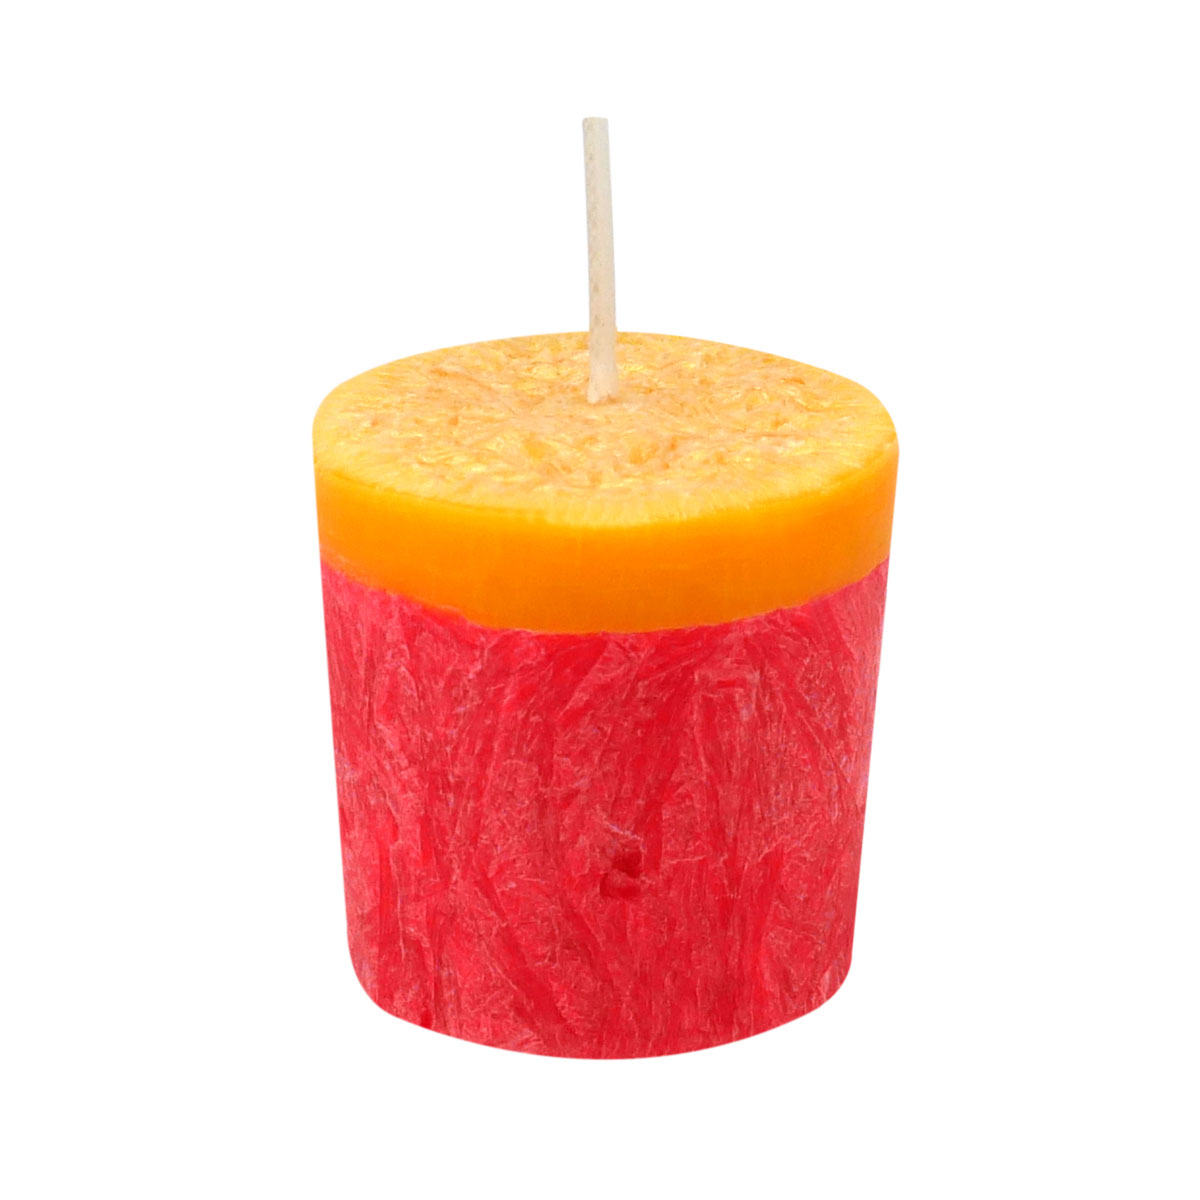 Erdbeer Maracuja - Votivkerze von Candle Factory